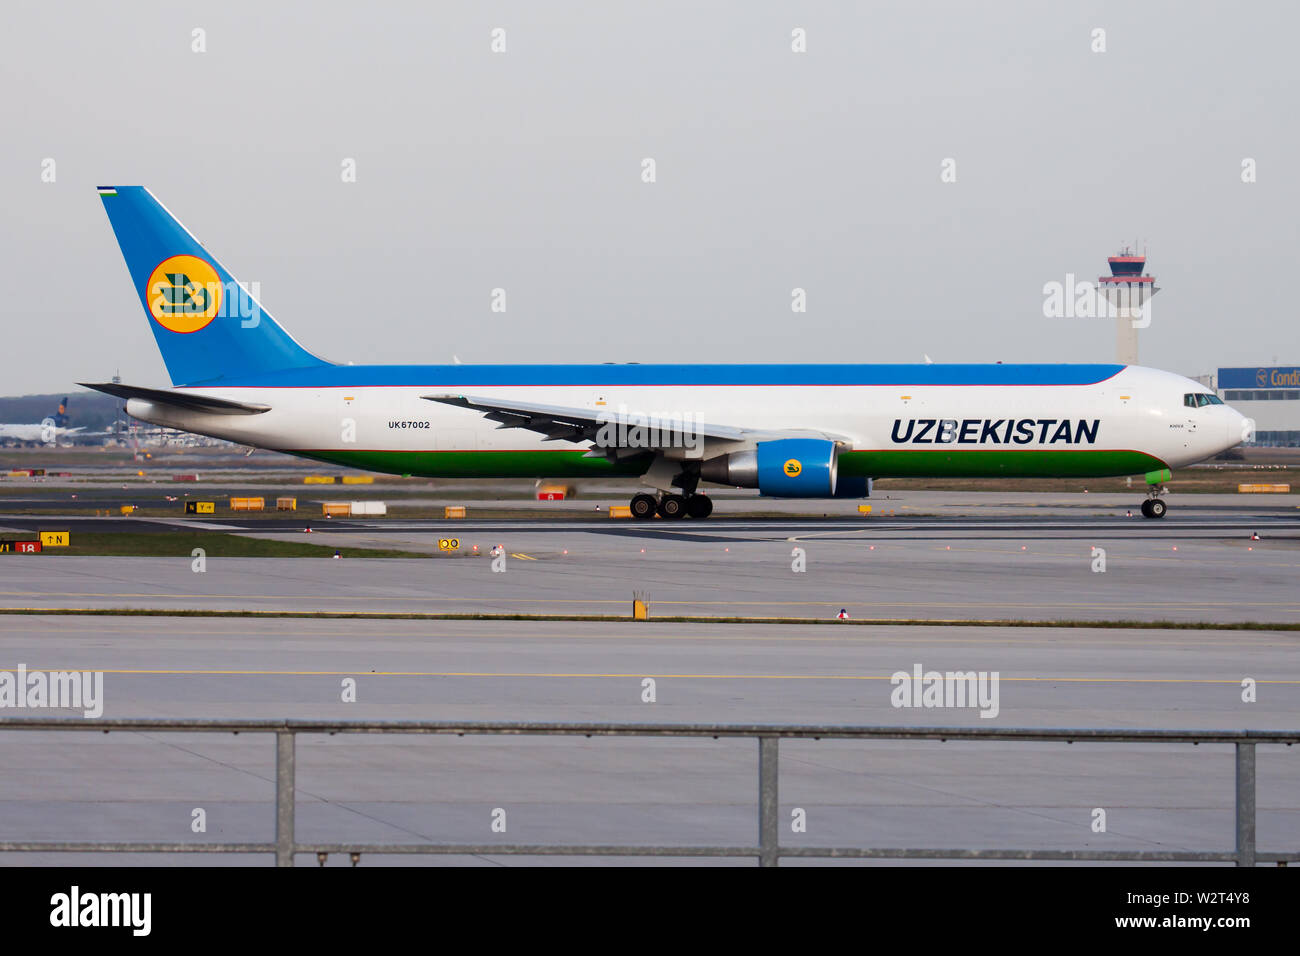 FRANKFURT / GERMANY - APRIL 10, 2015: Uzbekistan Airways Cargo Boeing 767-300 UK-67002 cargo plane departure at Frankfurt Airport Stock Photo